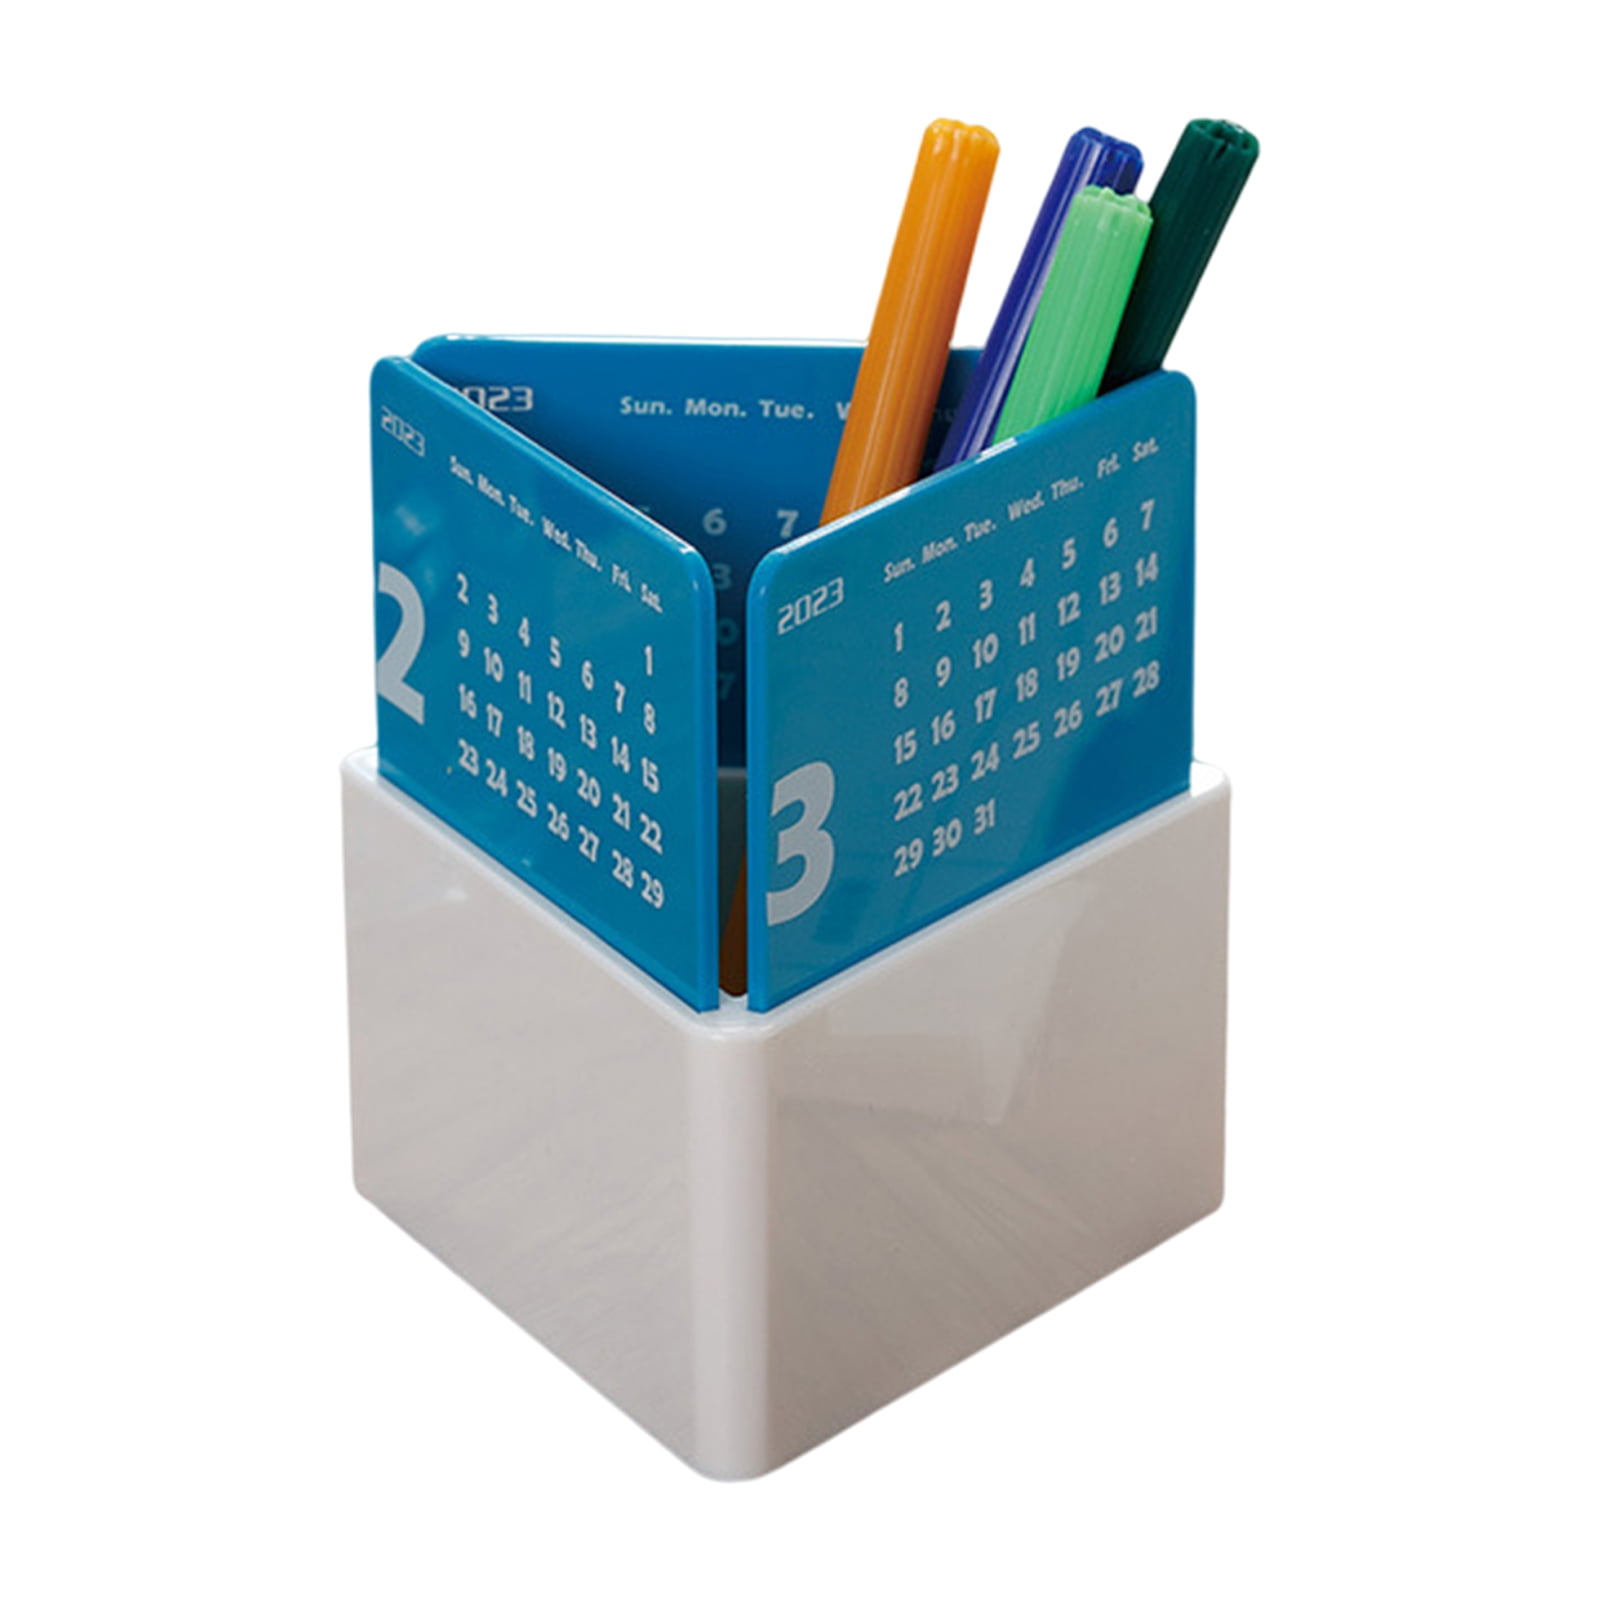 Desk Calendar With Pen Box Mockups